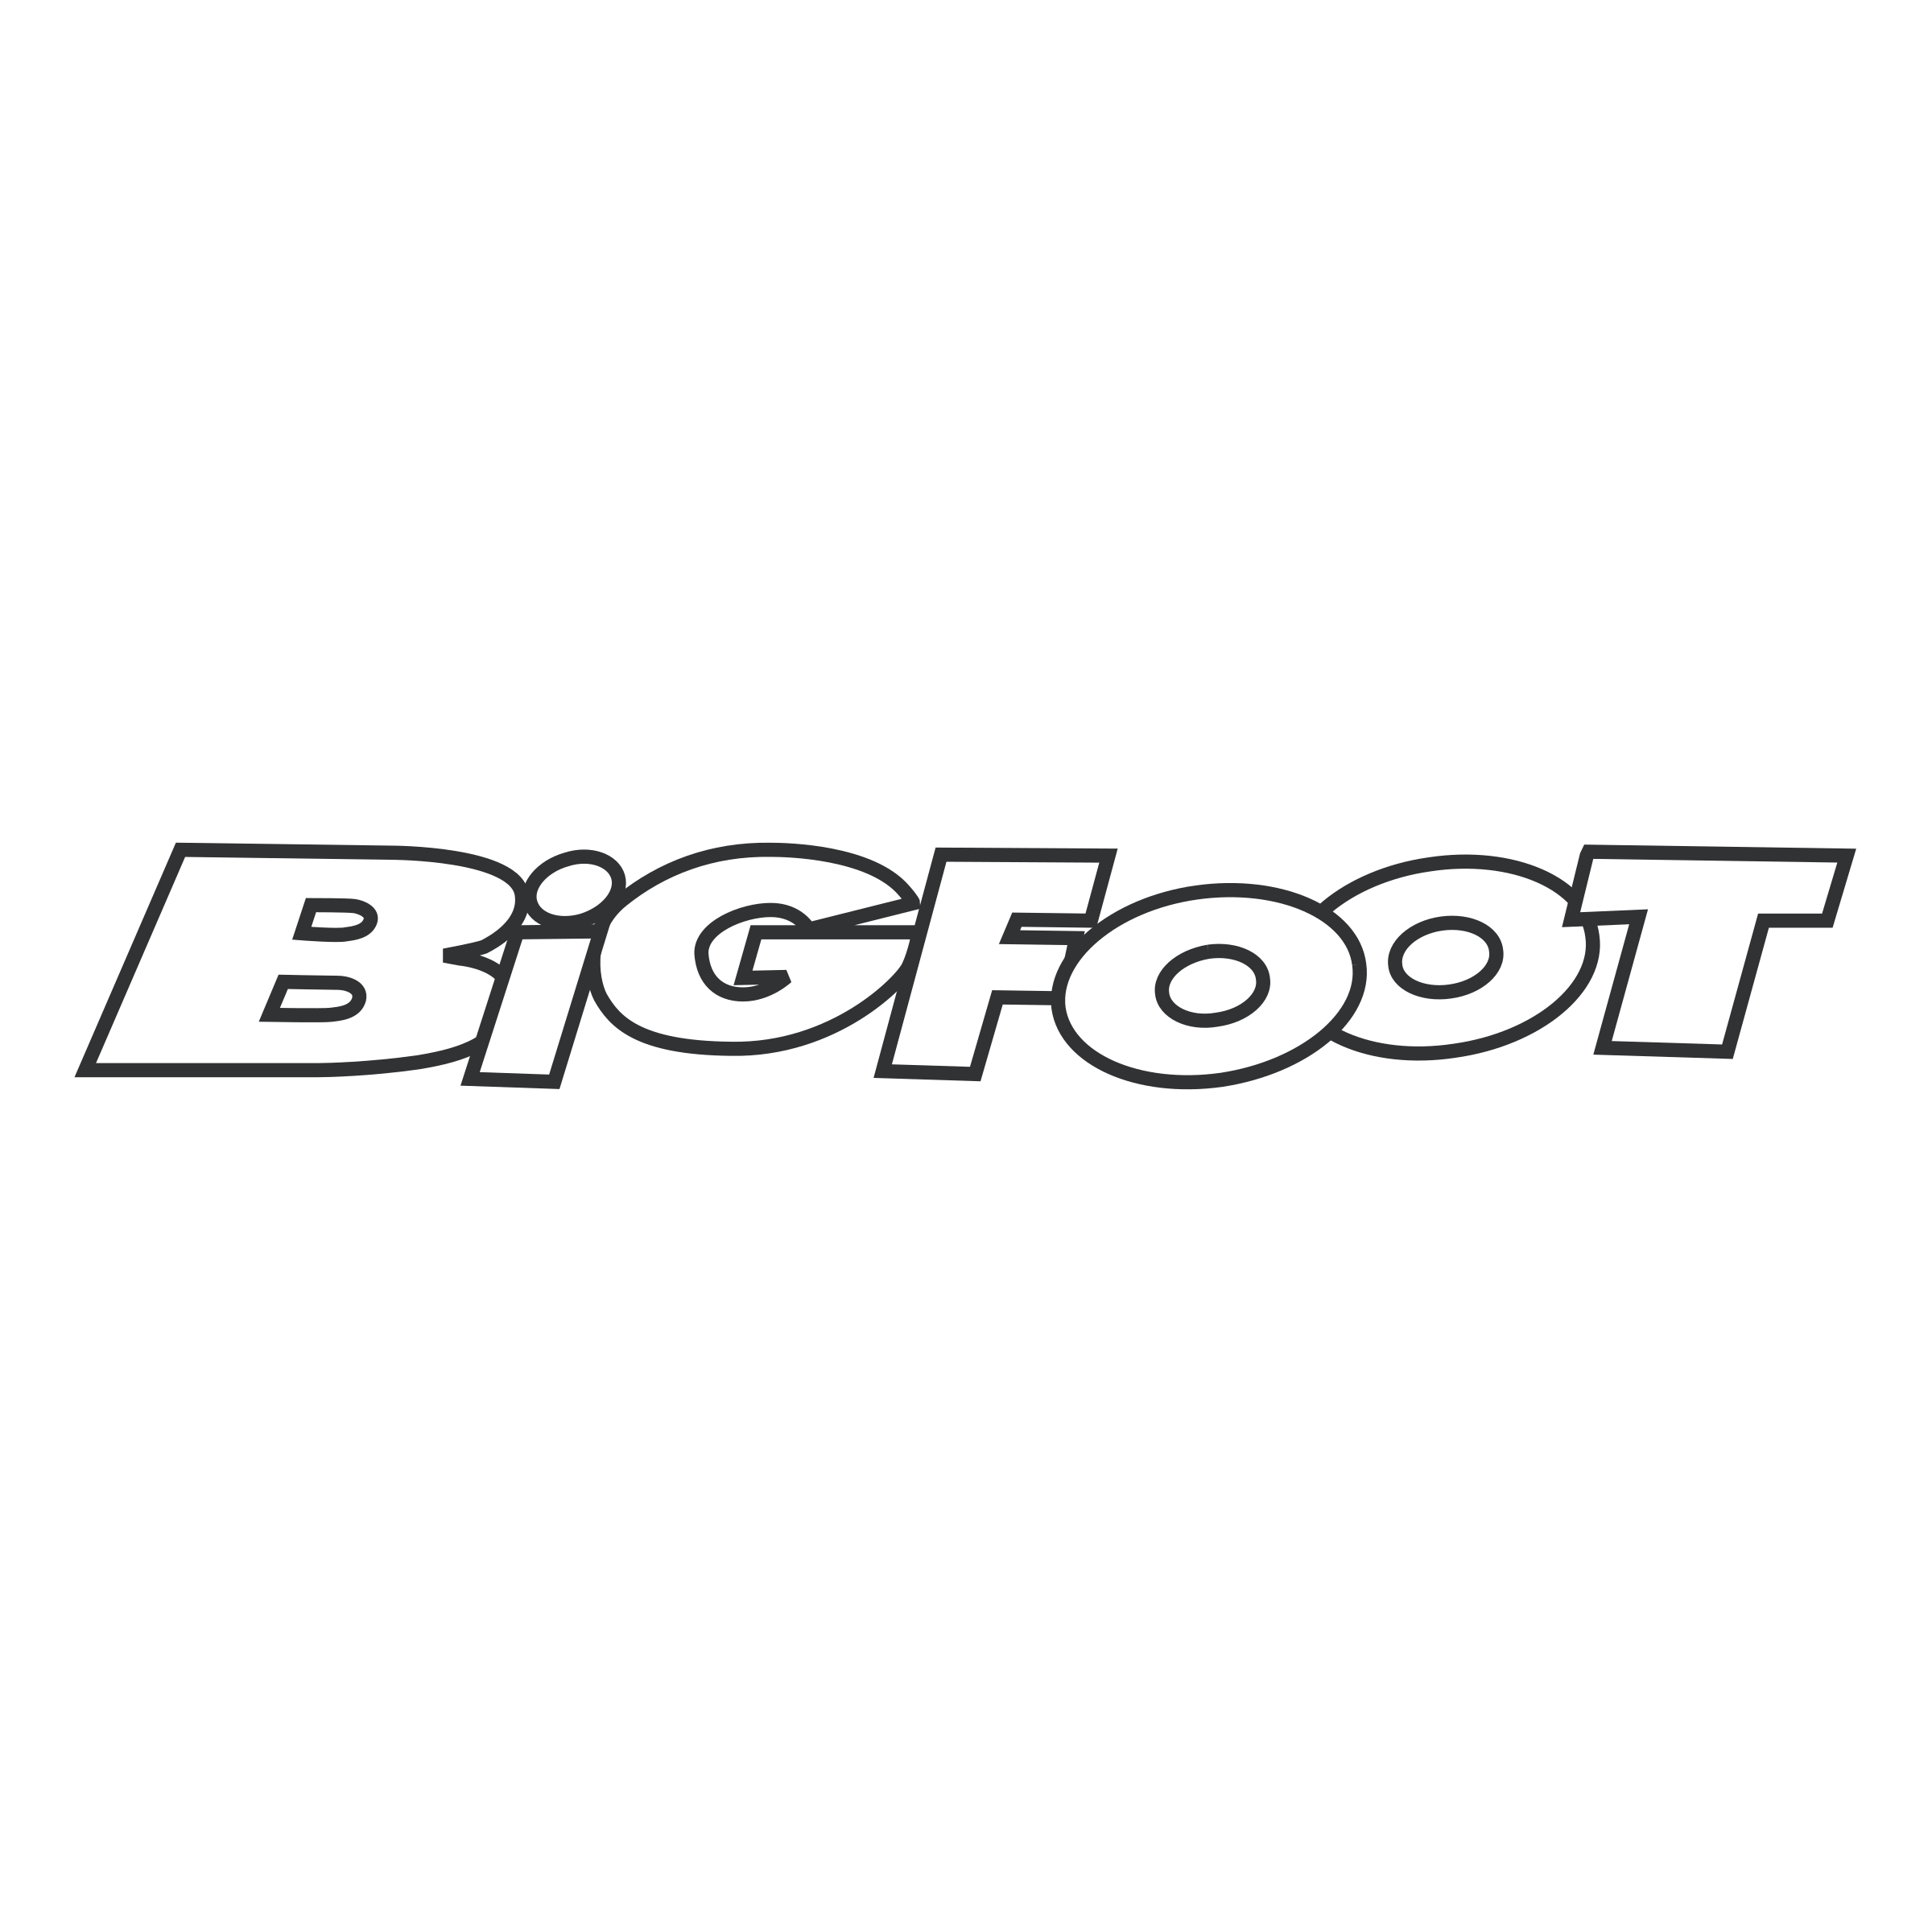 Bigfoot Logo - BigFoot Logo PNG Transparent & SVG Vector - Freebie Supply